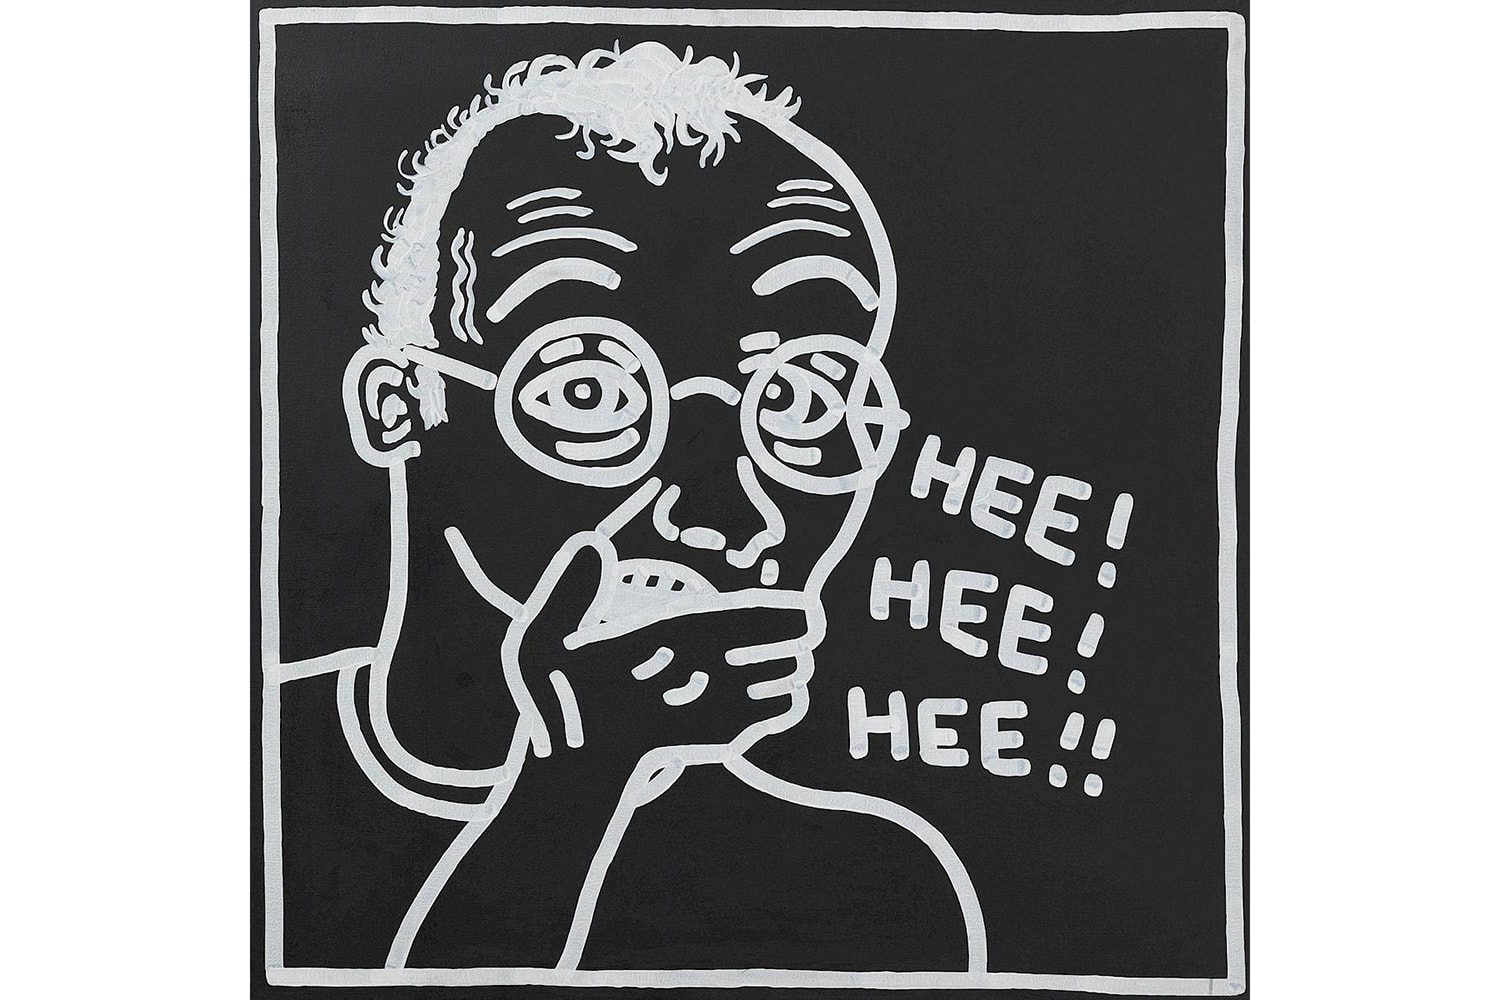 ALBERTINA Museum Keith Haring Exhibit exhibition art paintings artwork